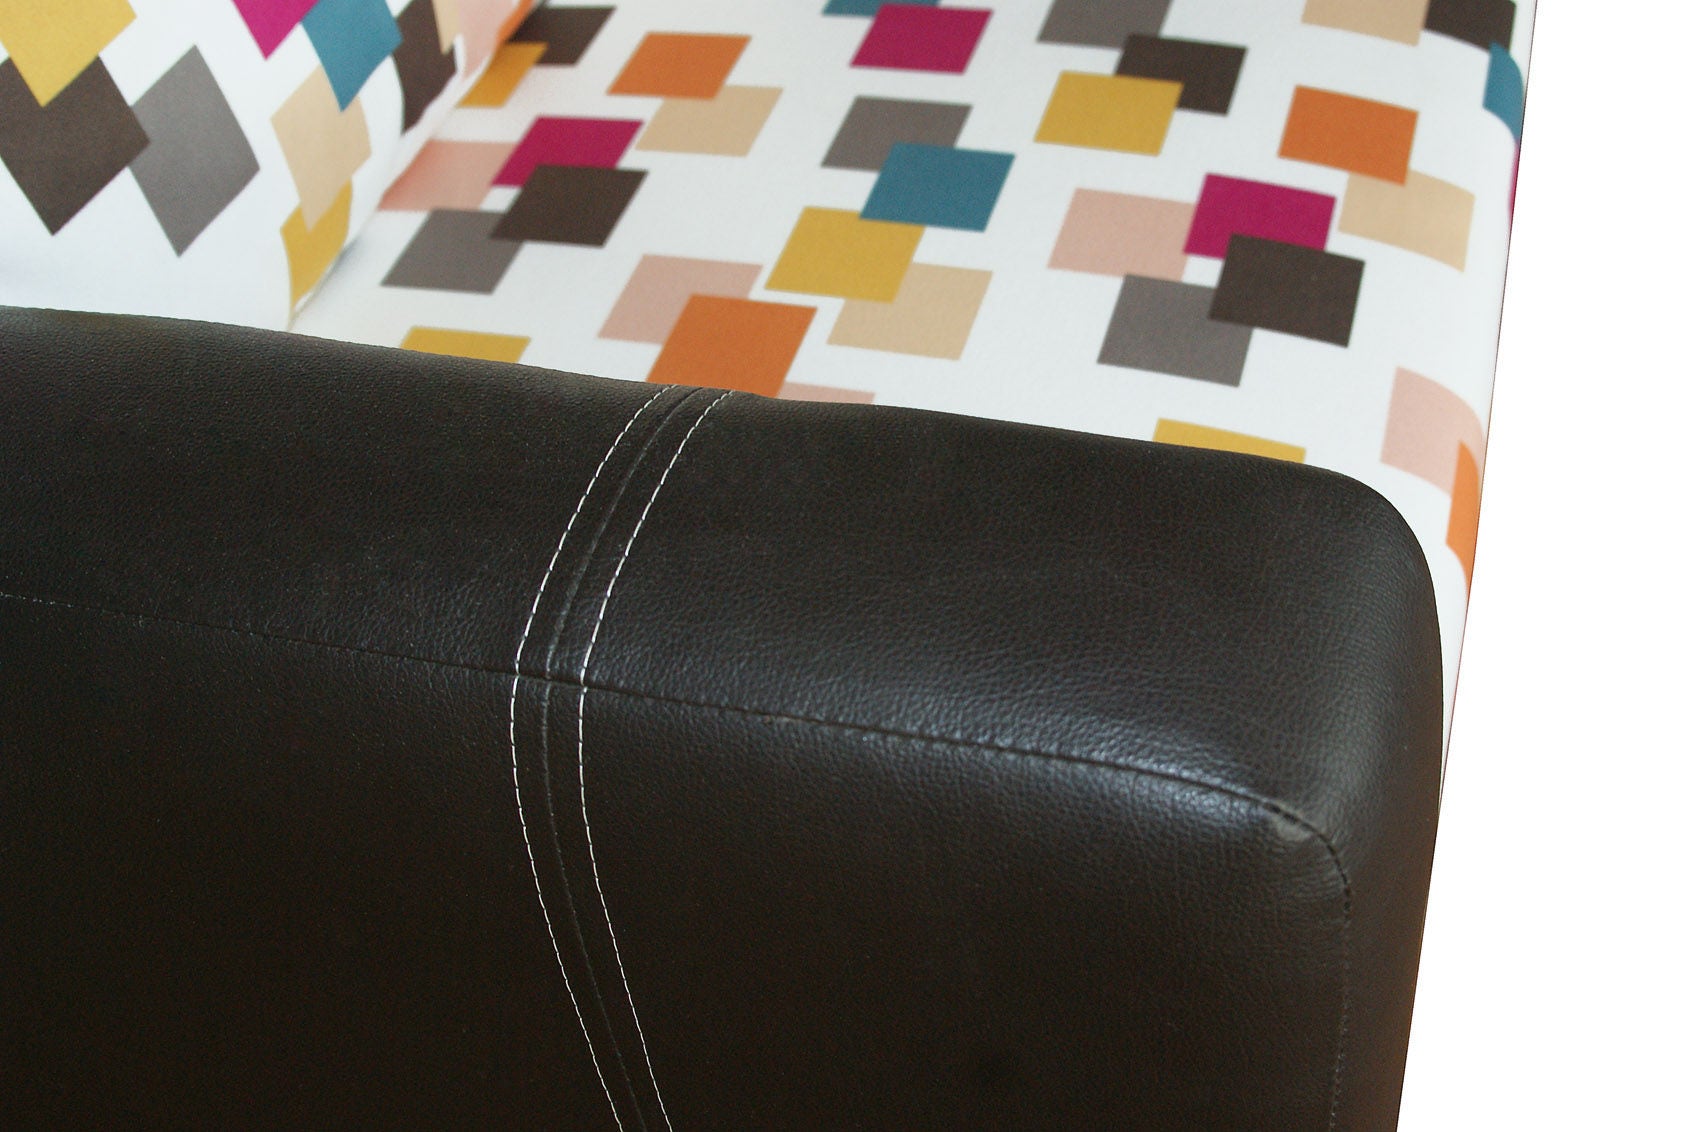 Canapea extensibila 2 locuri Mickey, stanga, cu lada, wenge + multicolor, 142 x 75 x 80 cm, 1C